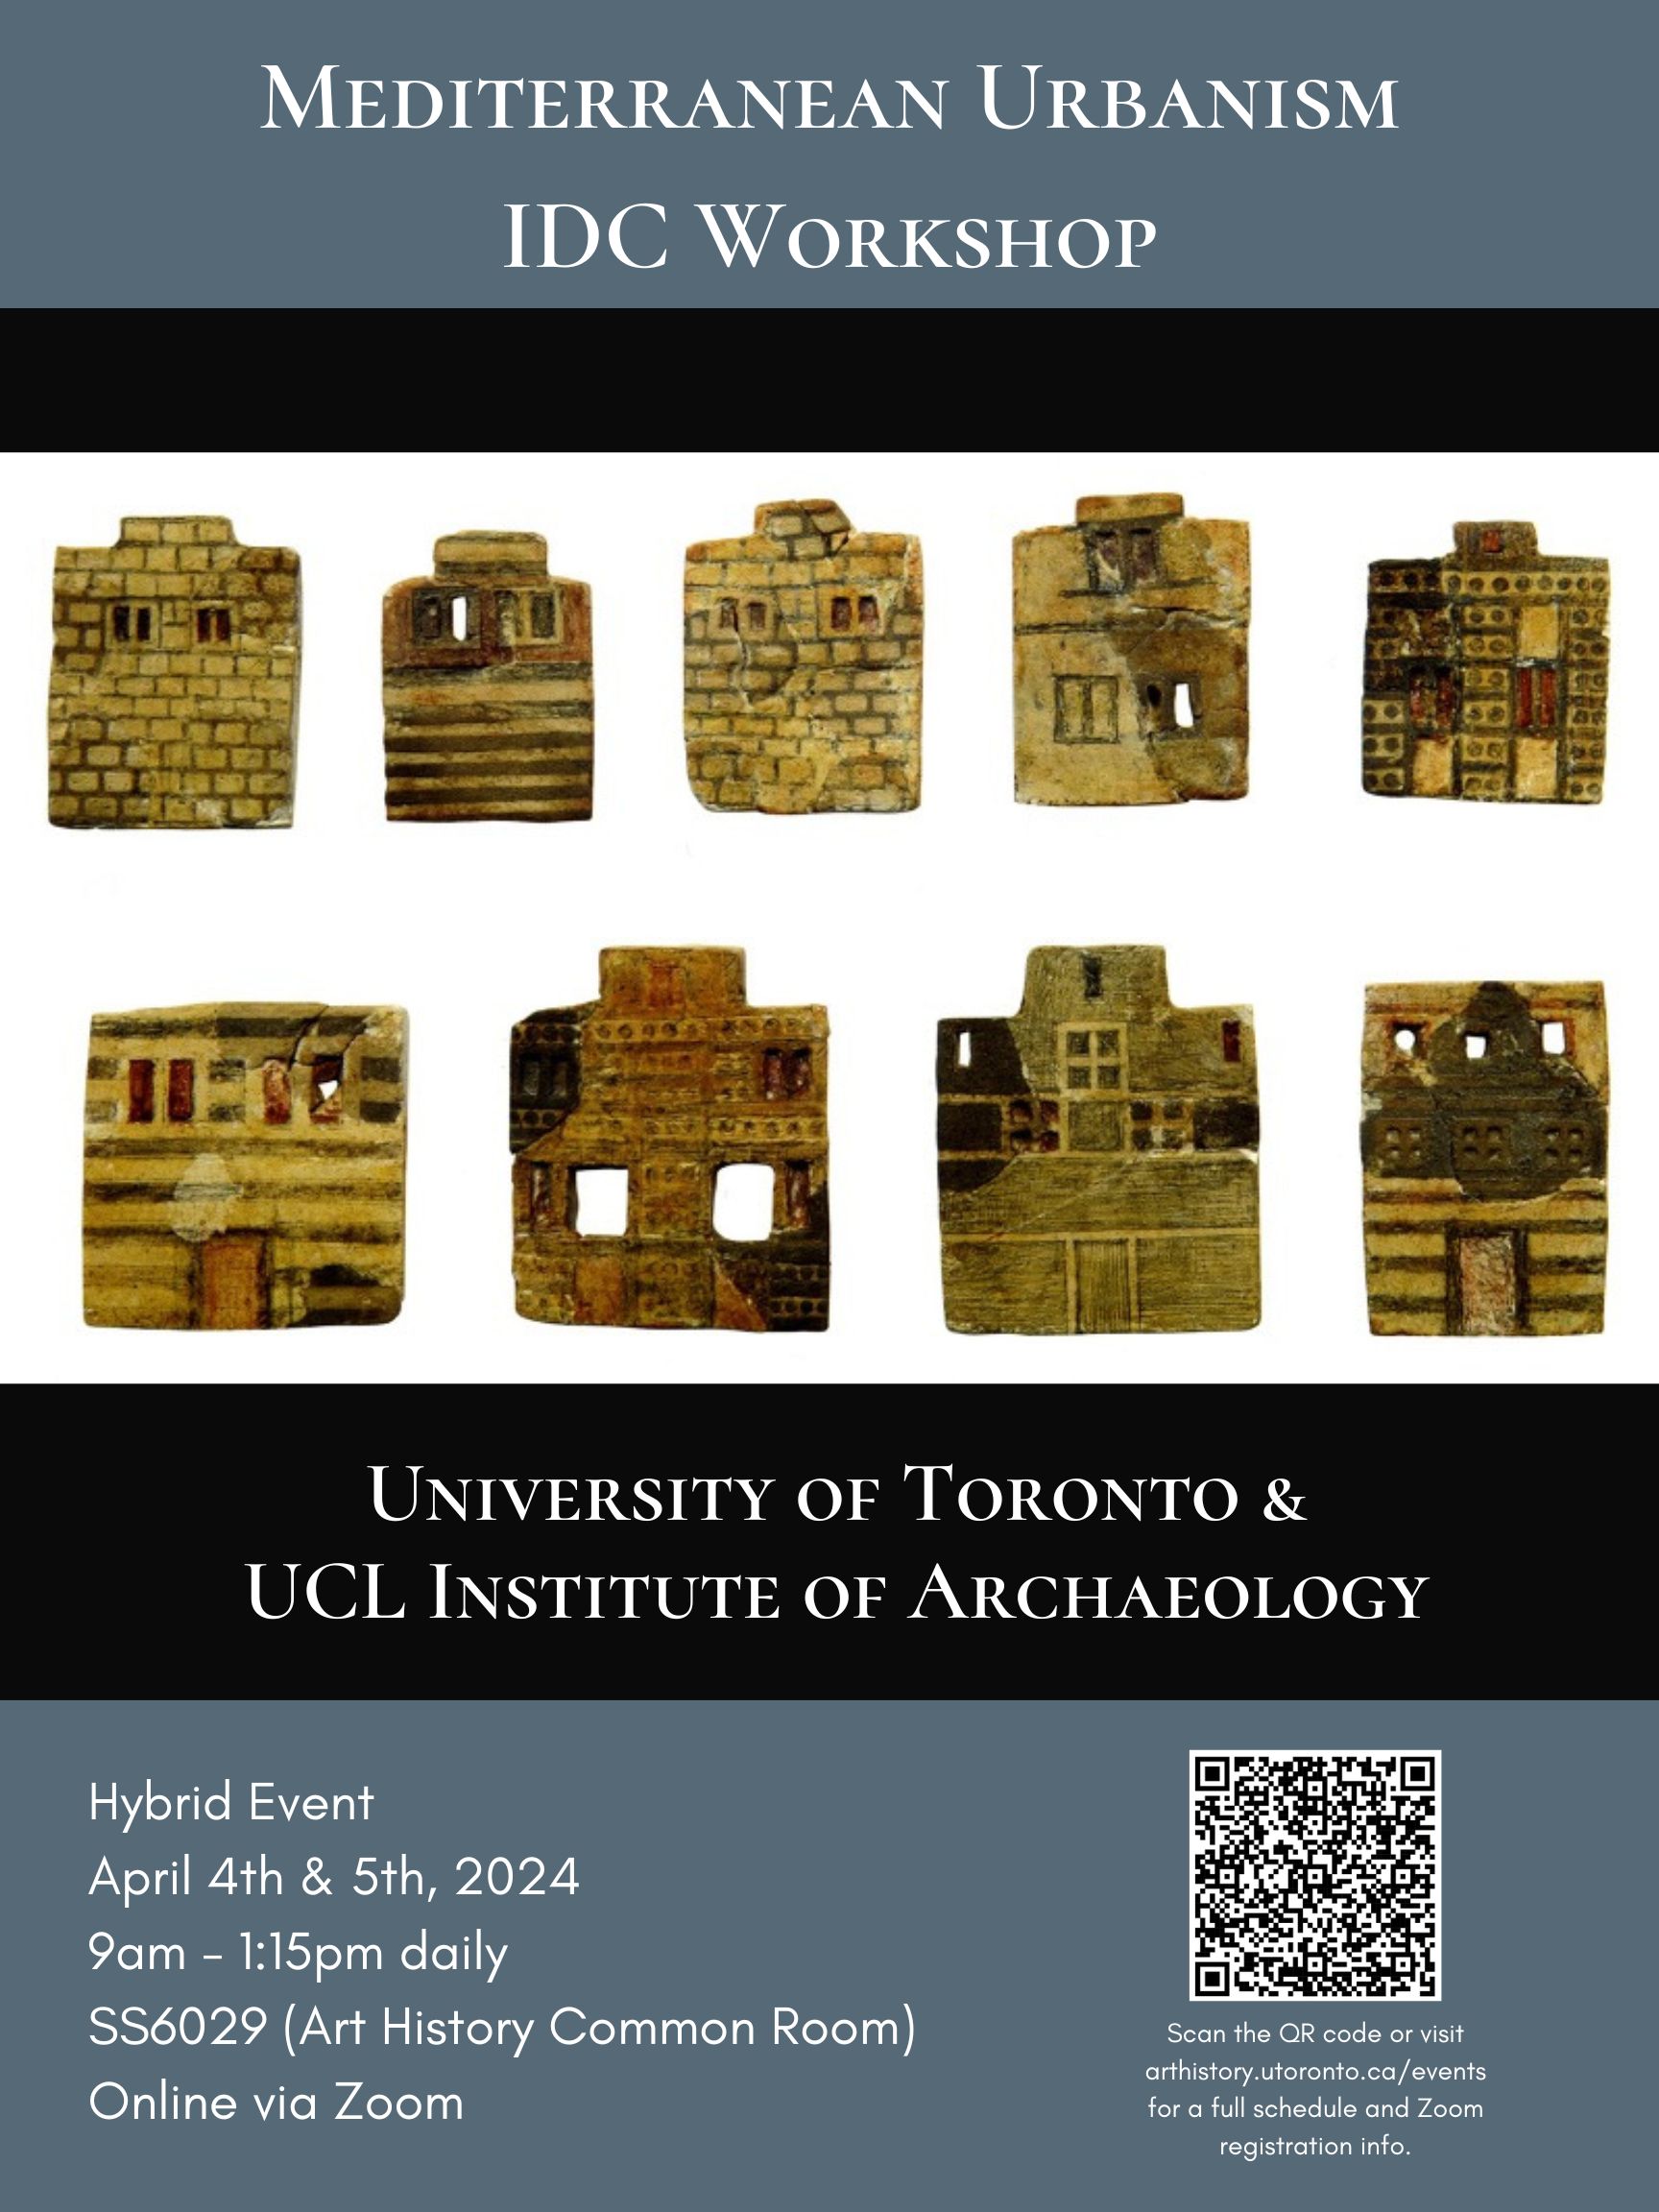 Mediterranean Archaeology IDC Workshop Poster town images